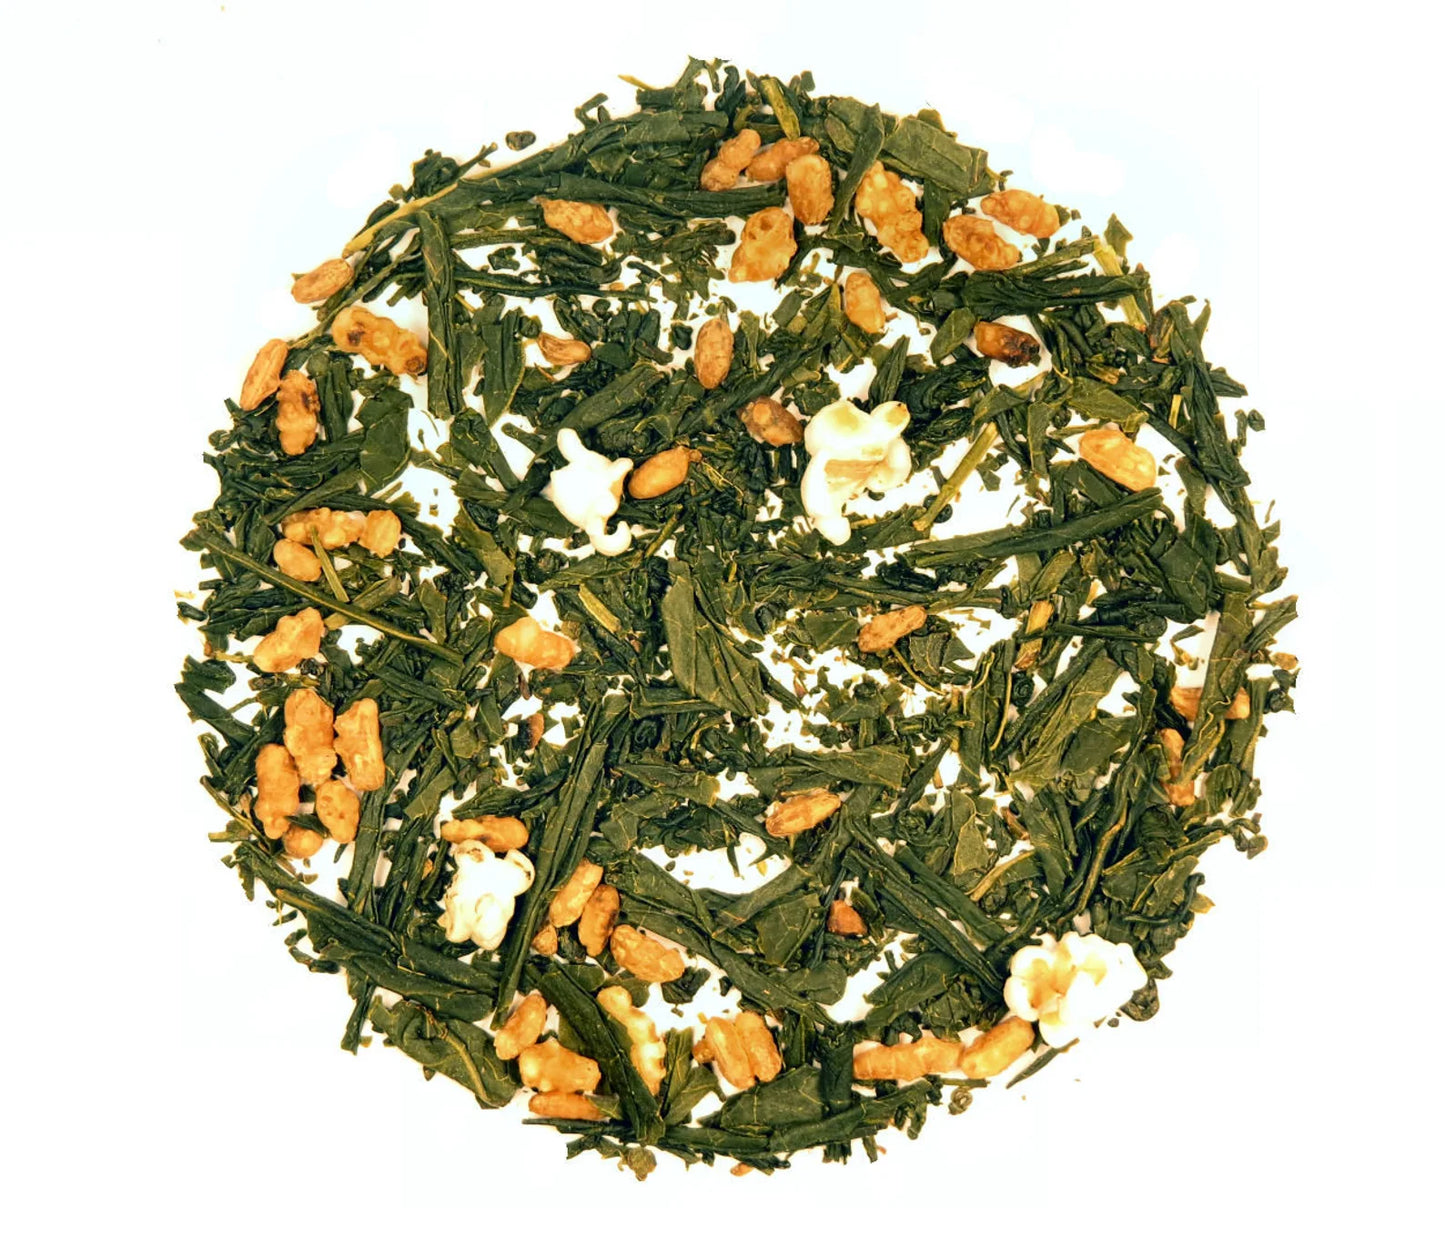 Genmaicha Green Tea (Loose Leaf)